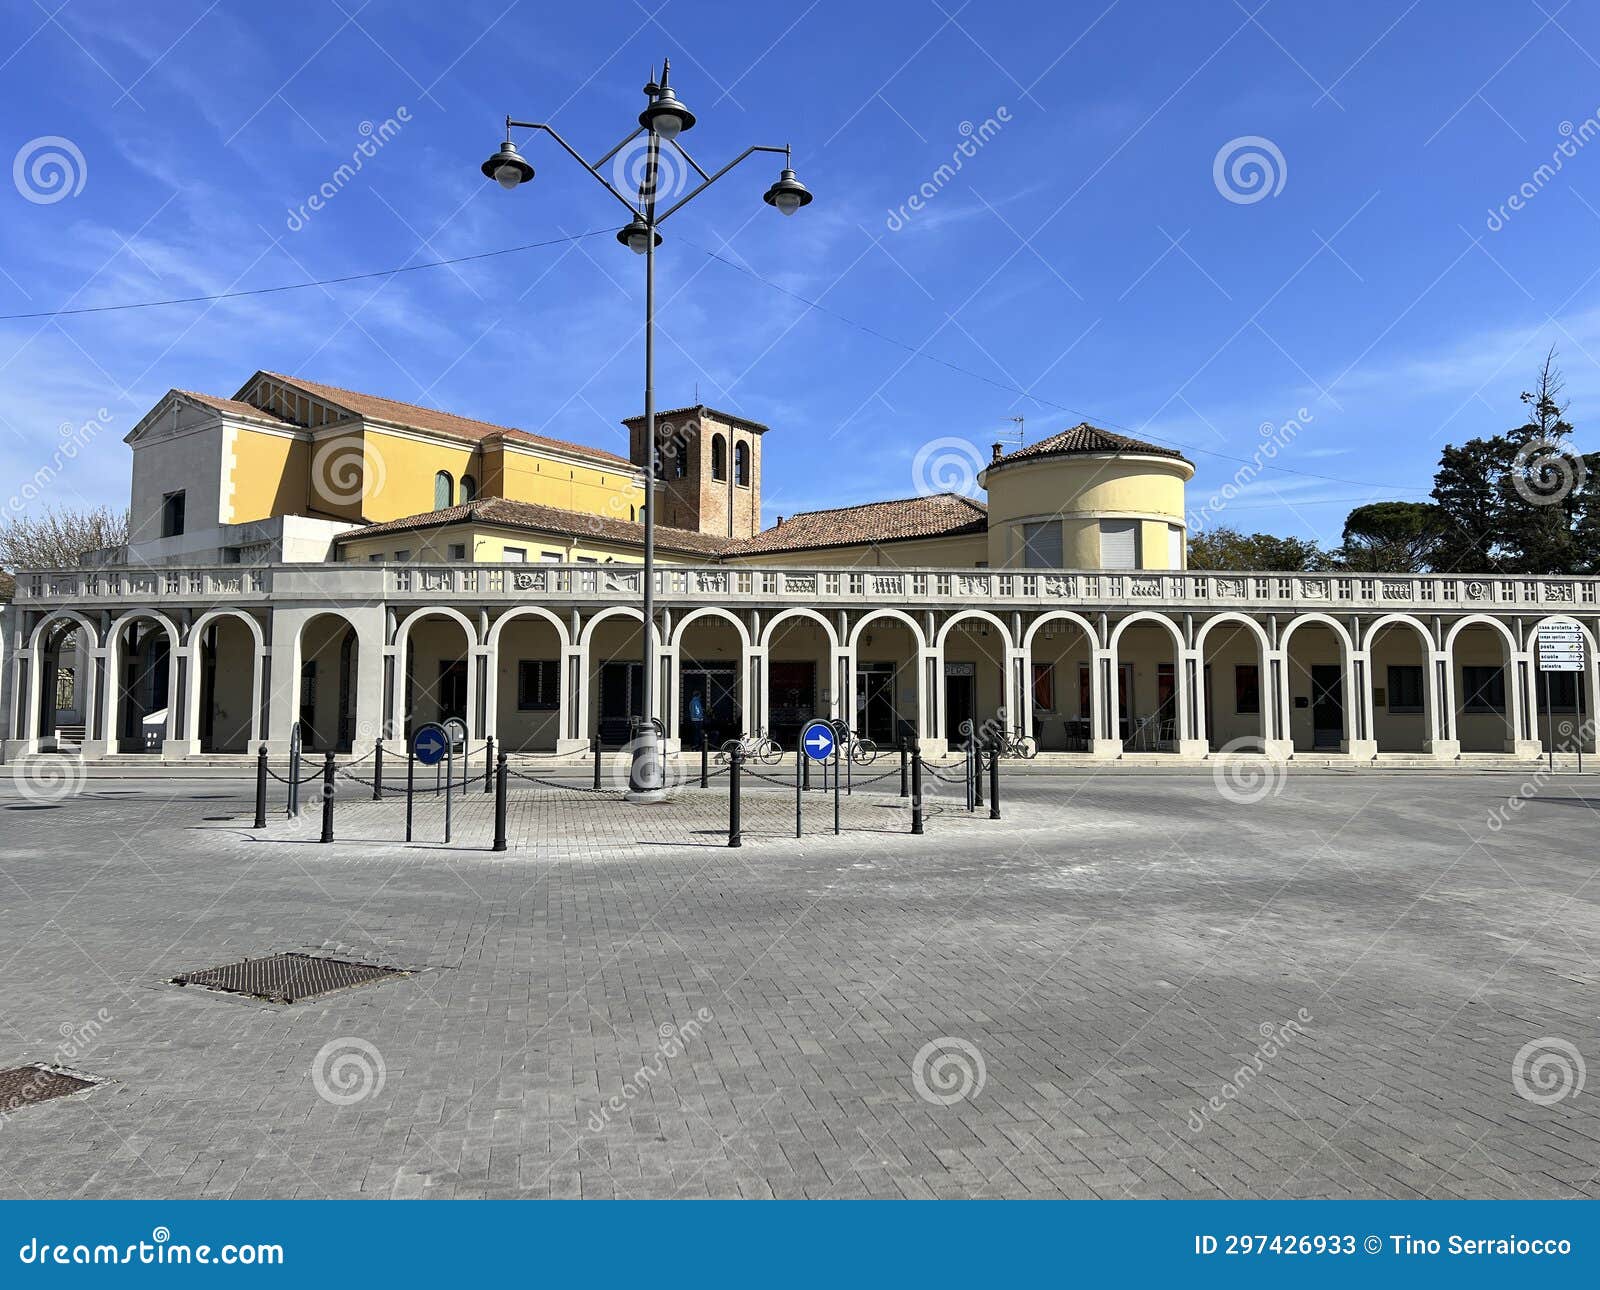 town square of tresigallo metaphysical city ferrara italy